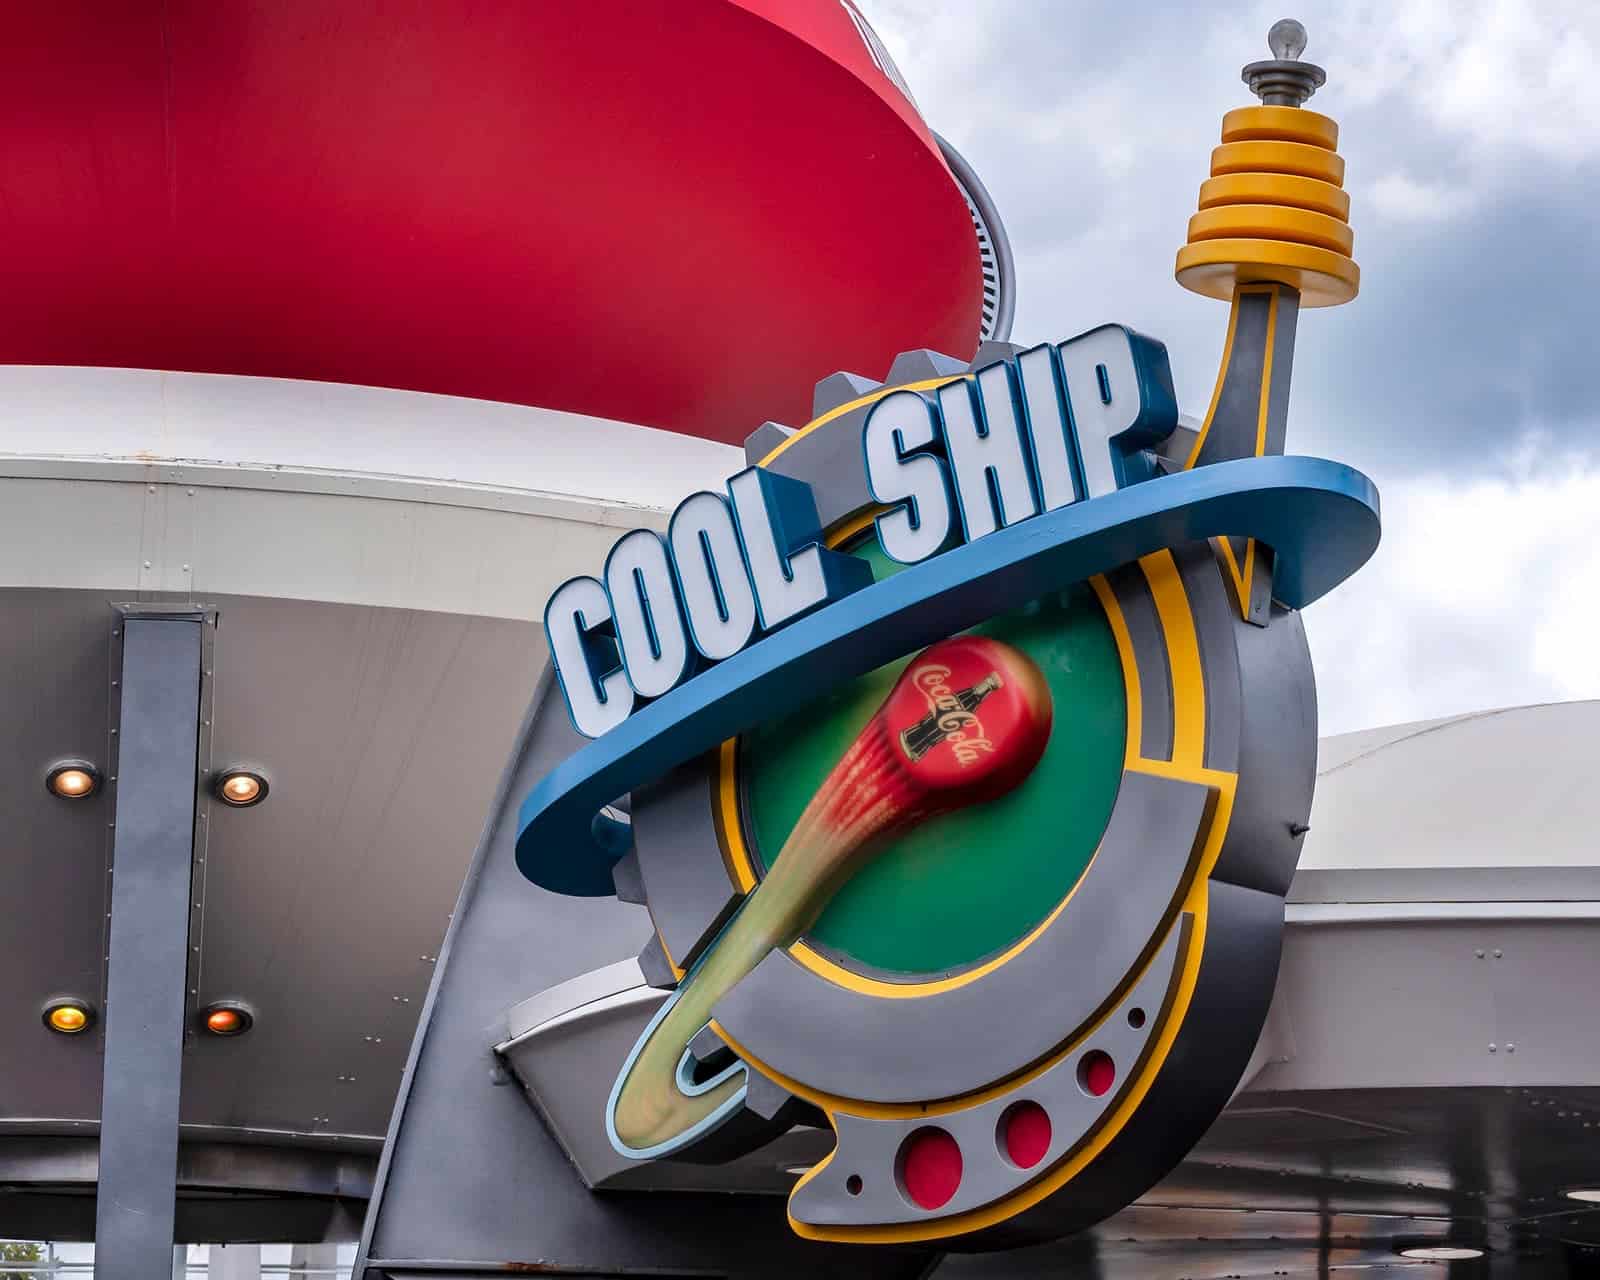 Cool Ship